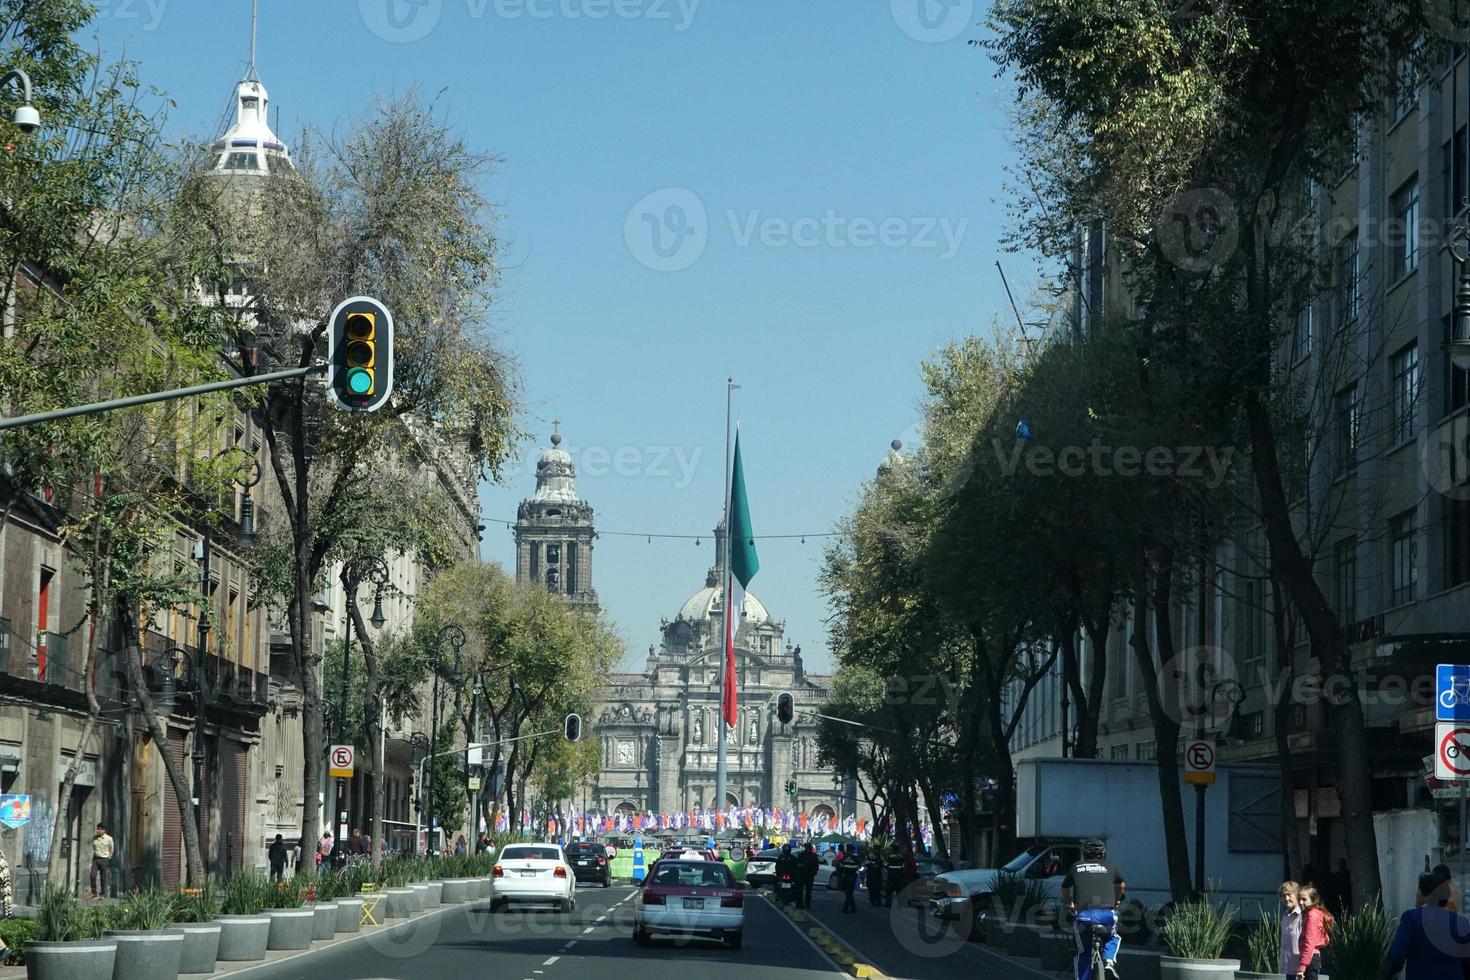 Mexico stad, Mexico - november 5 2017 - Mexicaans metropolis hoofdstad overbelast verkeer foto